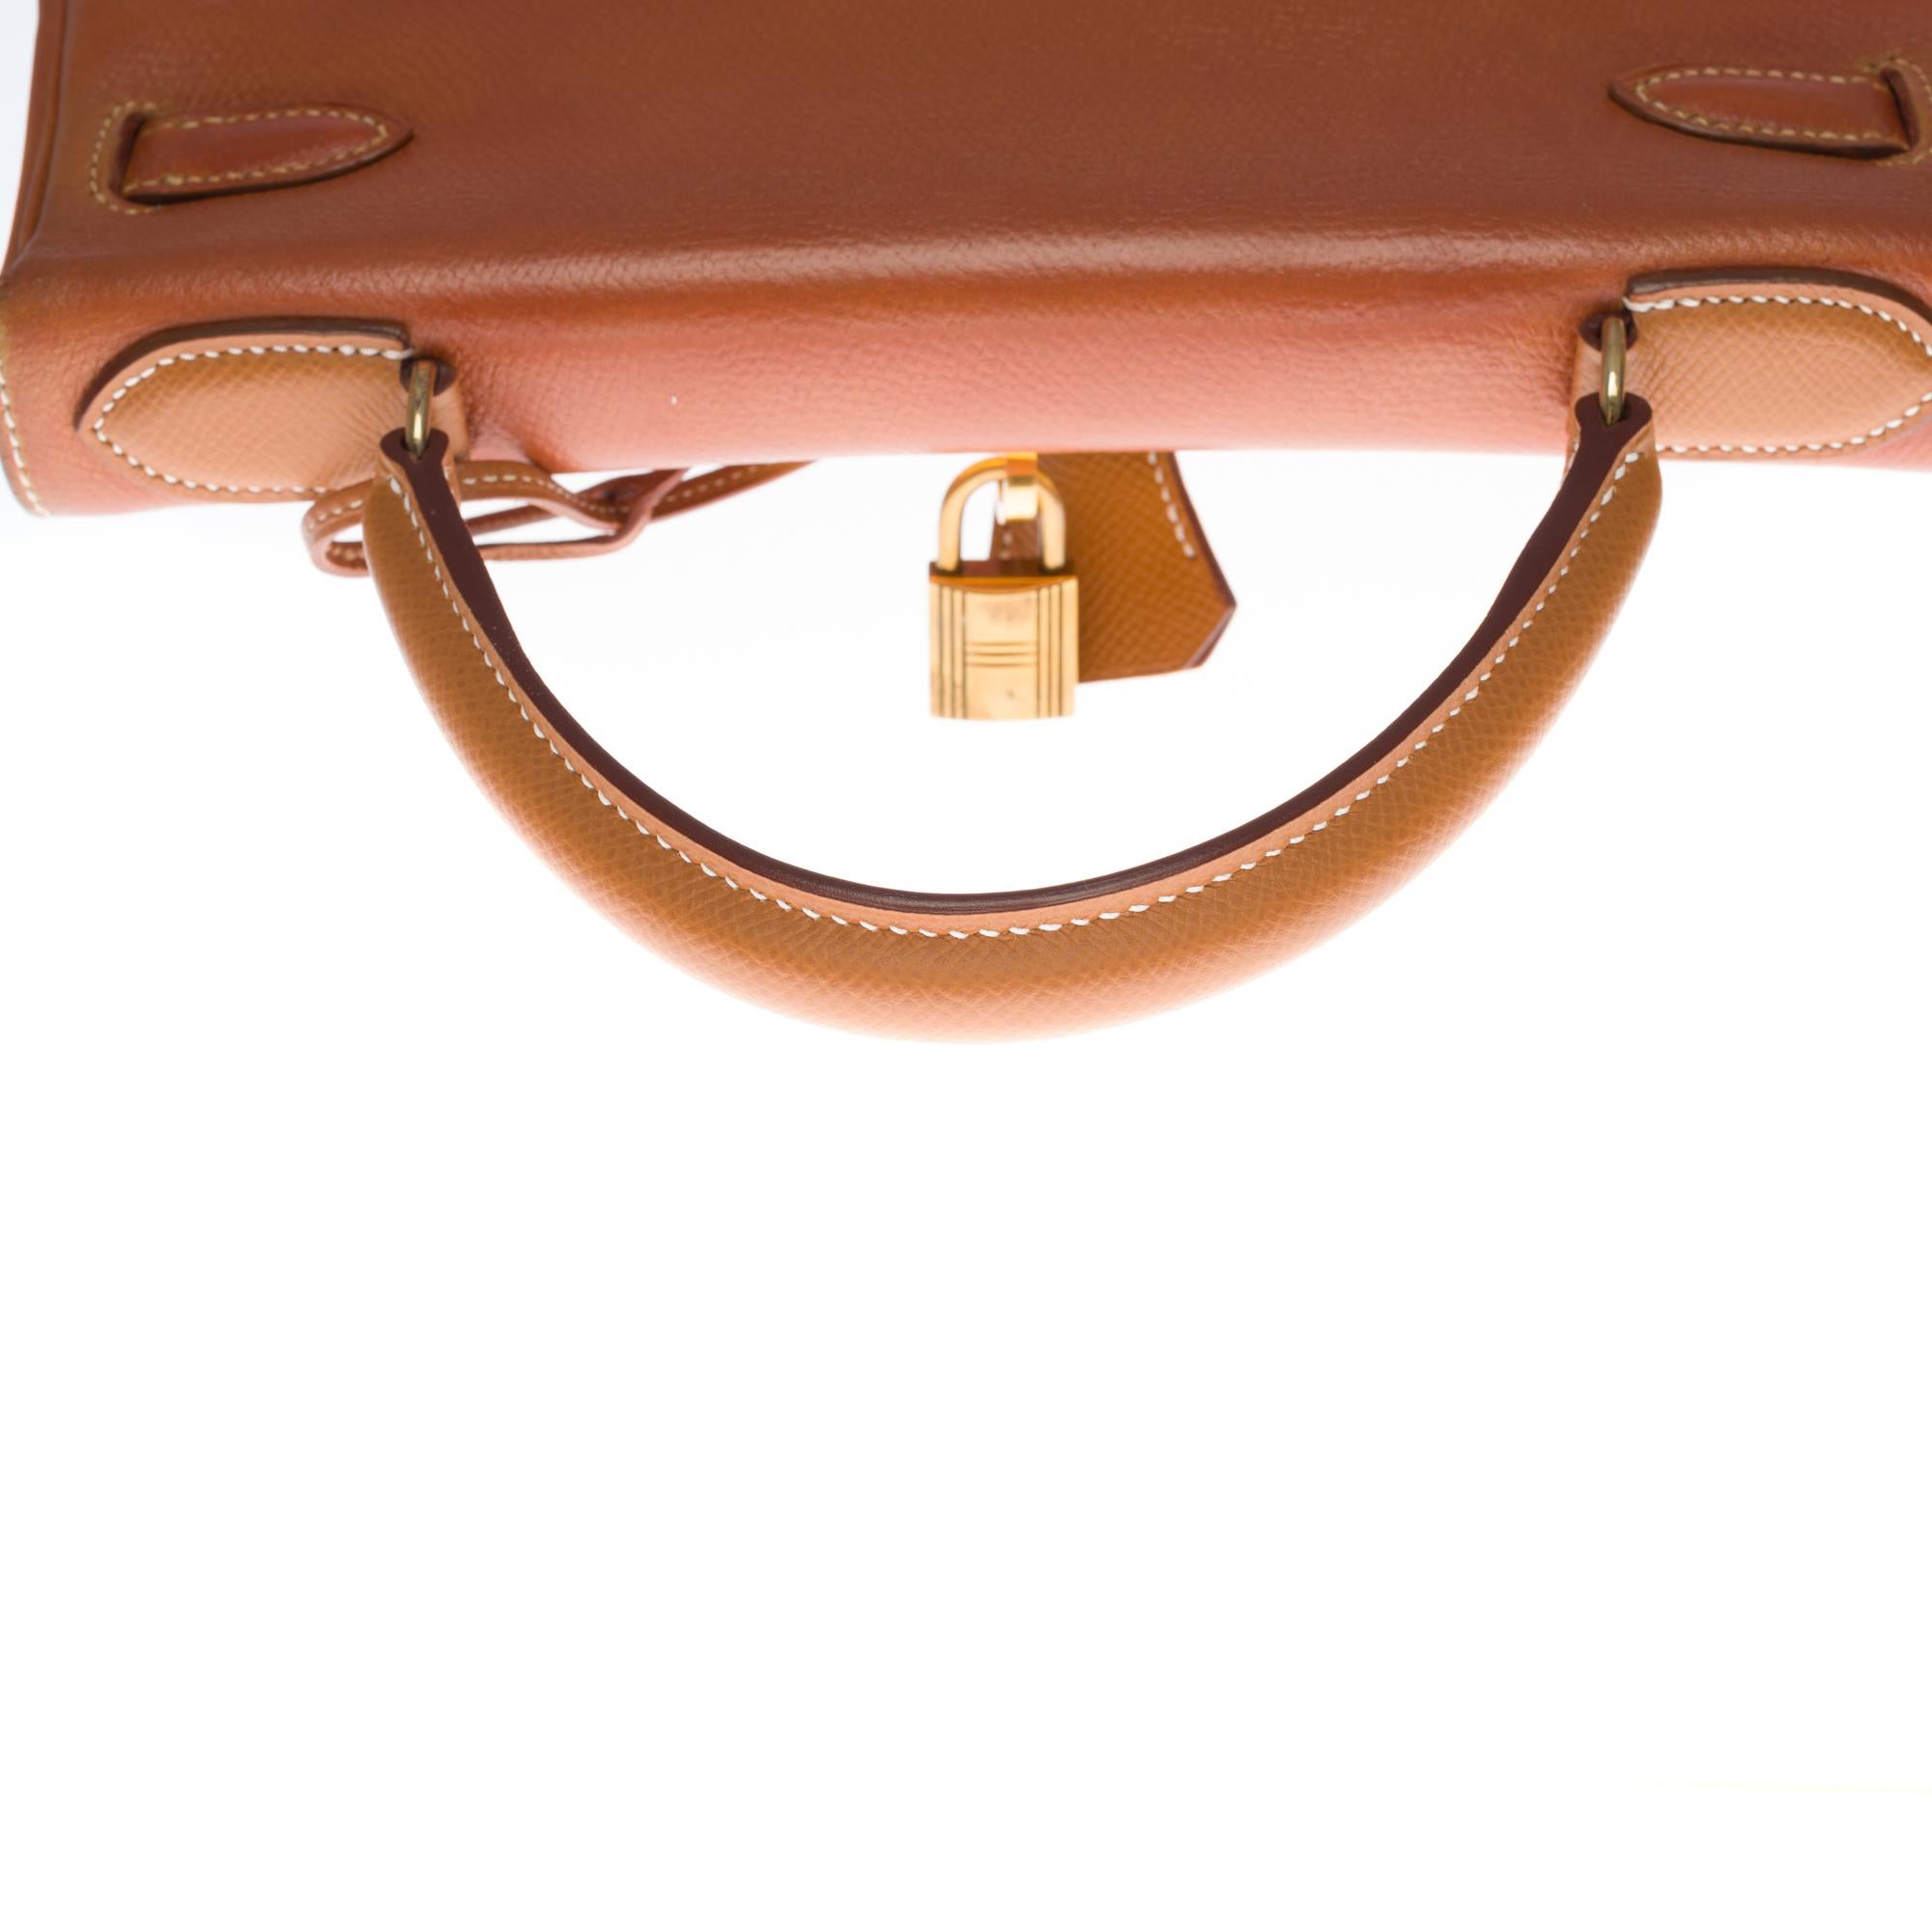 Hermès Kelly 28cm retourné handbag with strap in Gold Courchevel leather, GHW 3